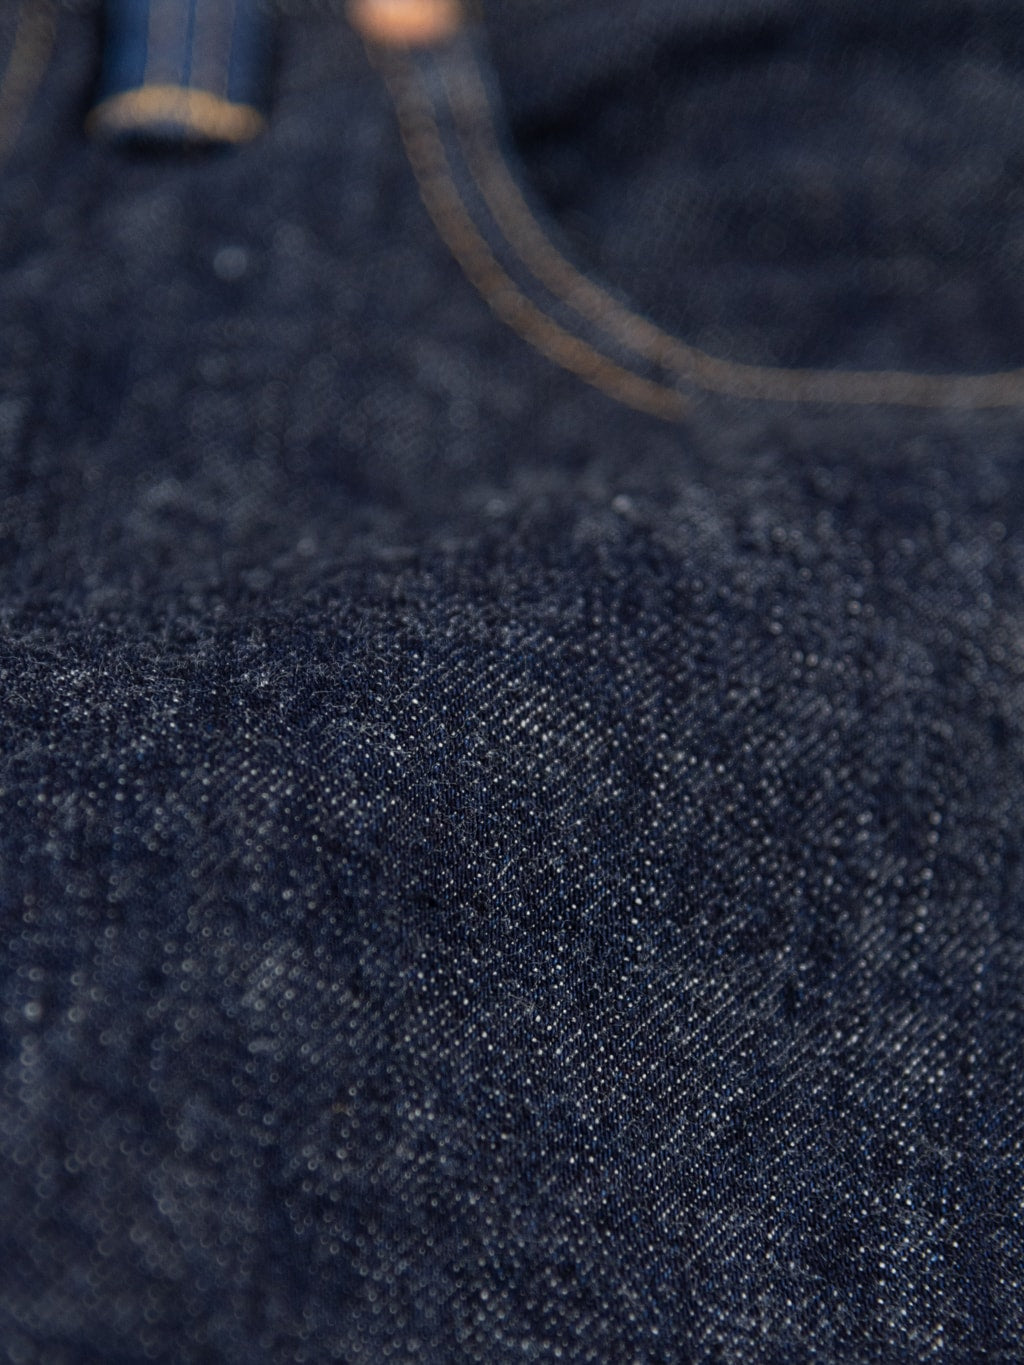 TCB 20s indigo Jeans one wash denim fabric